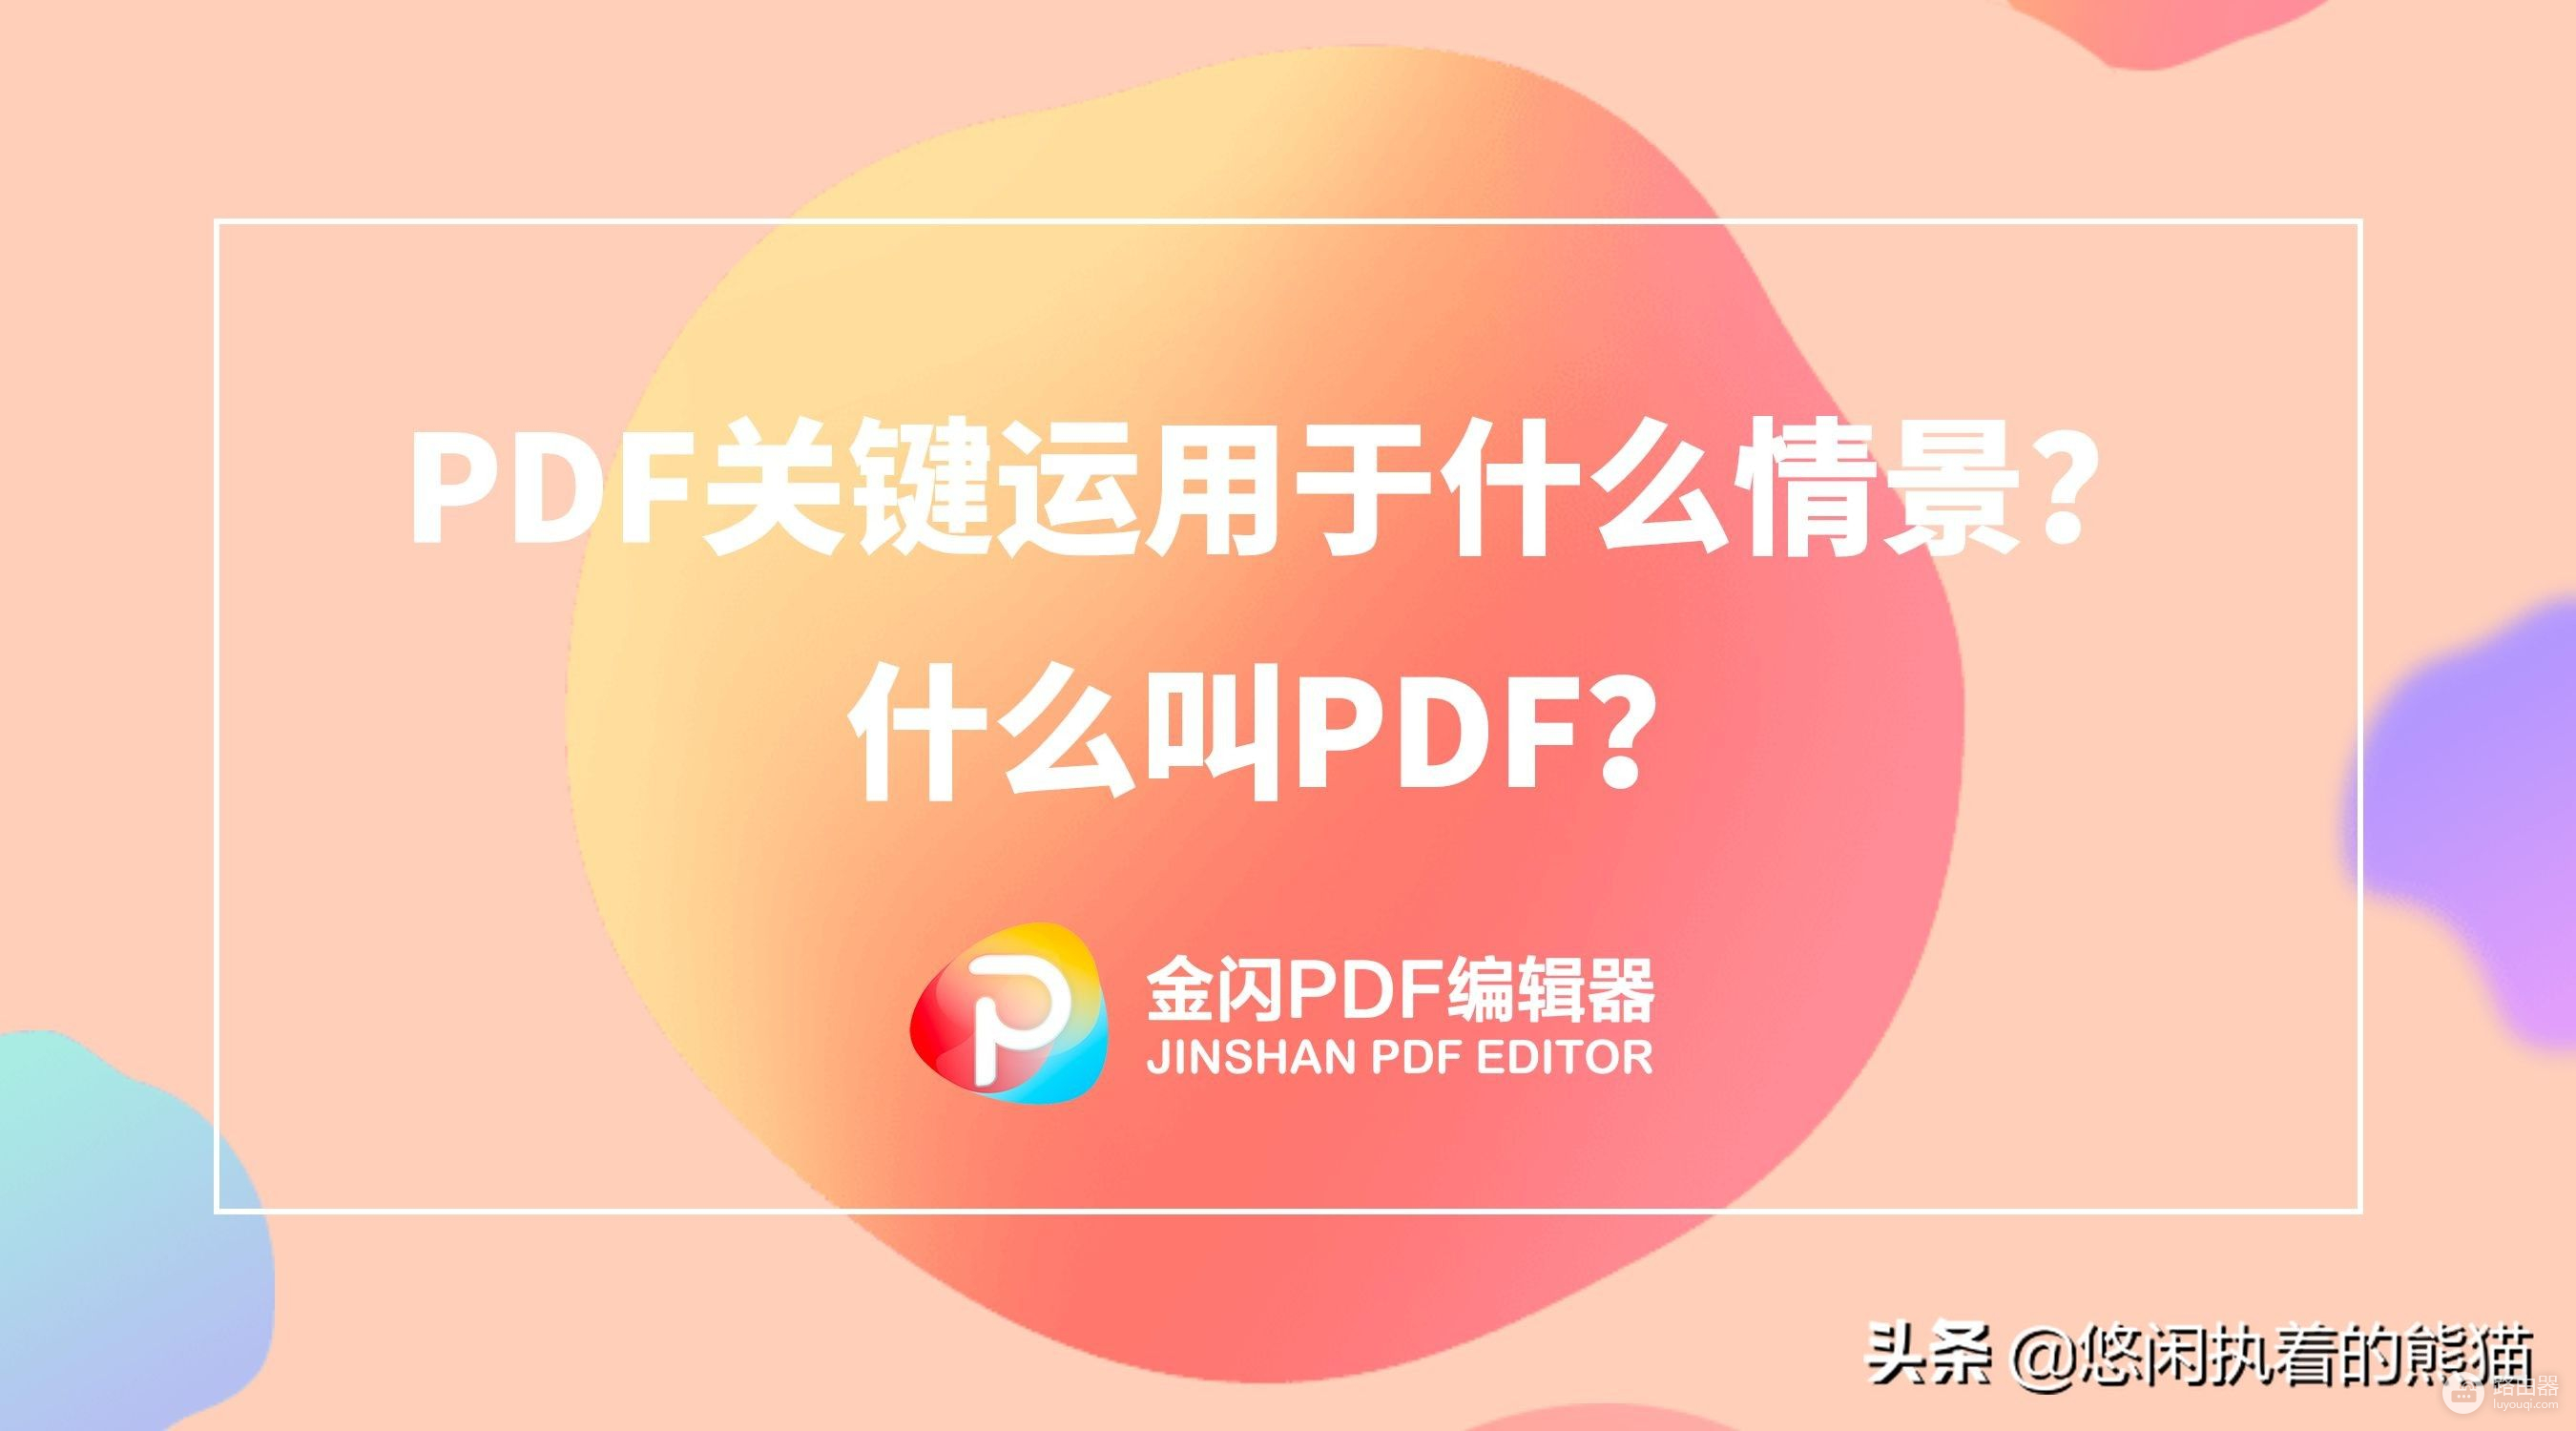 PDF运用于什么情景？什么叫PDF？